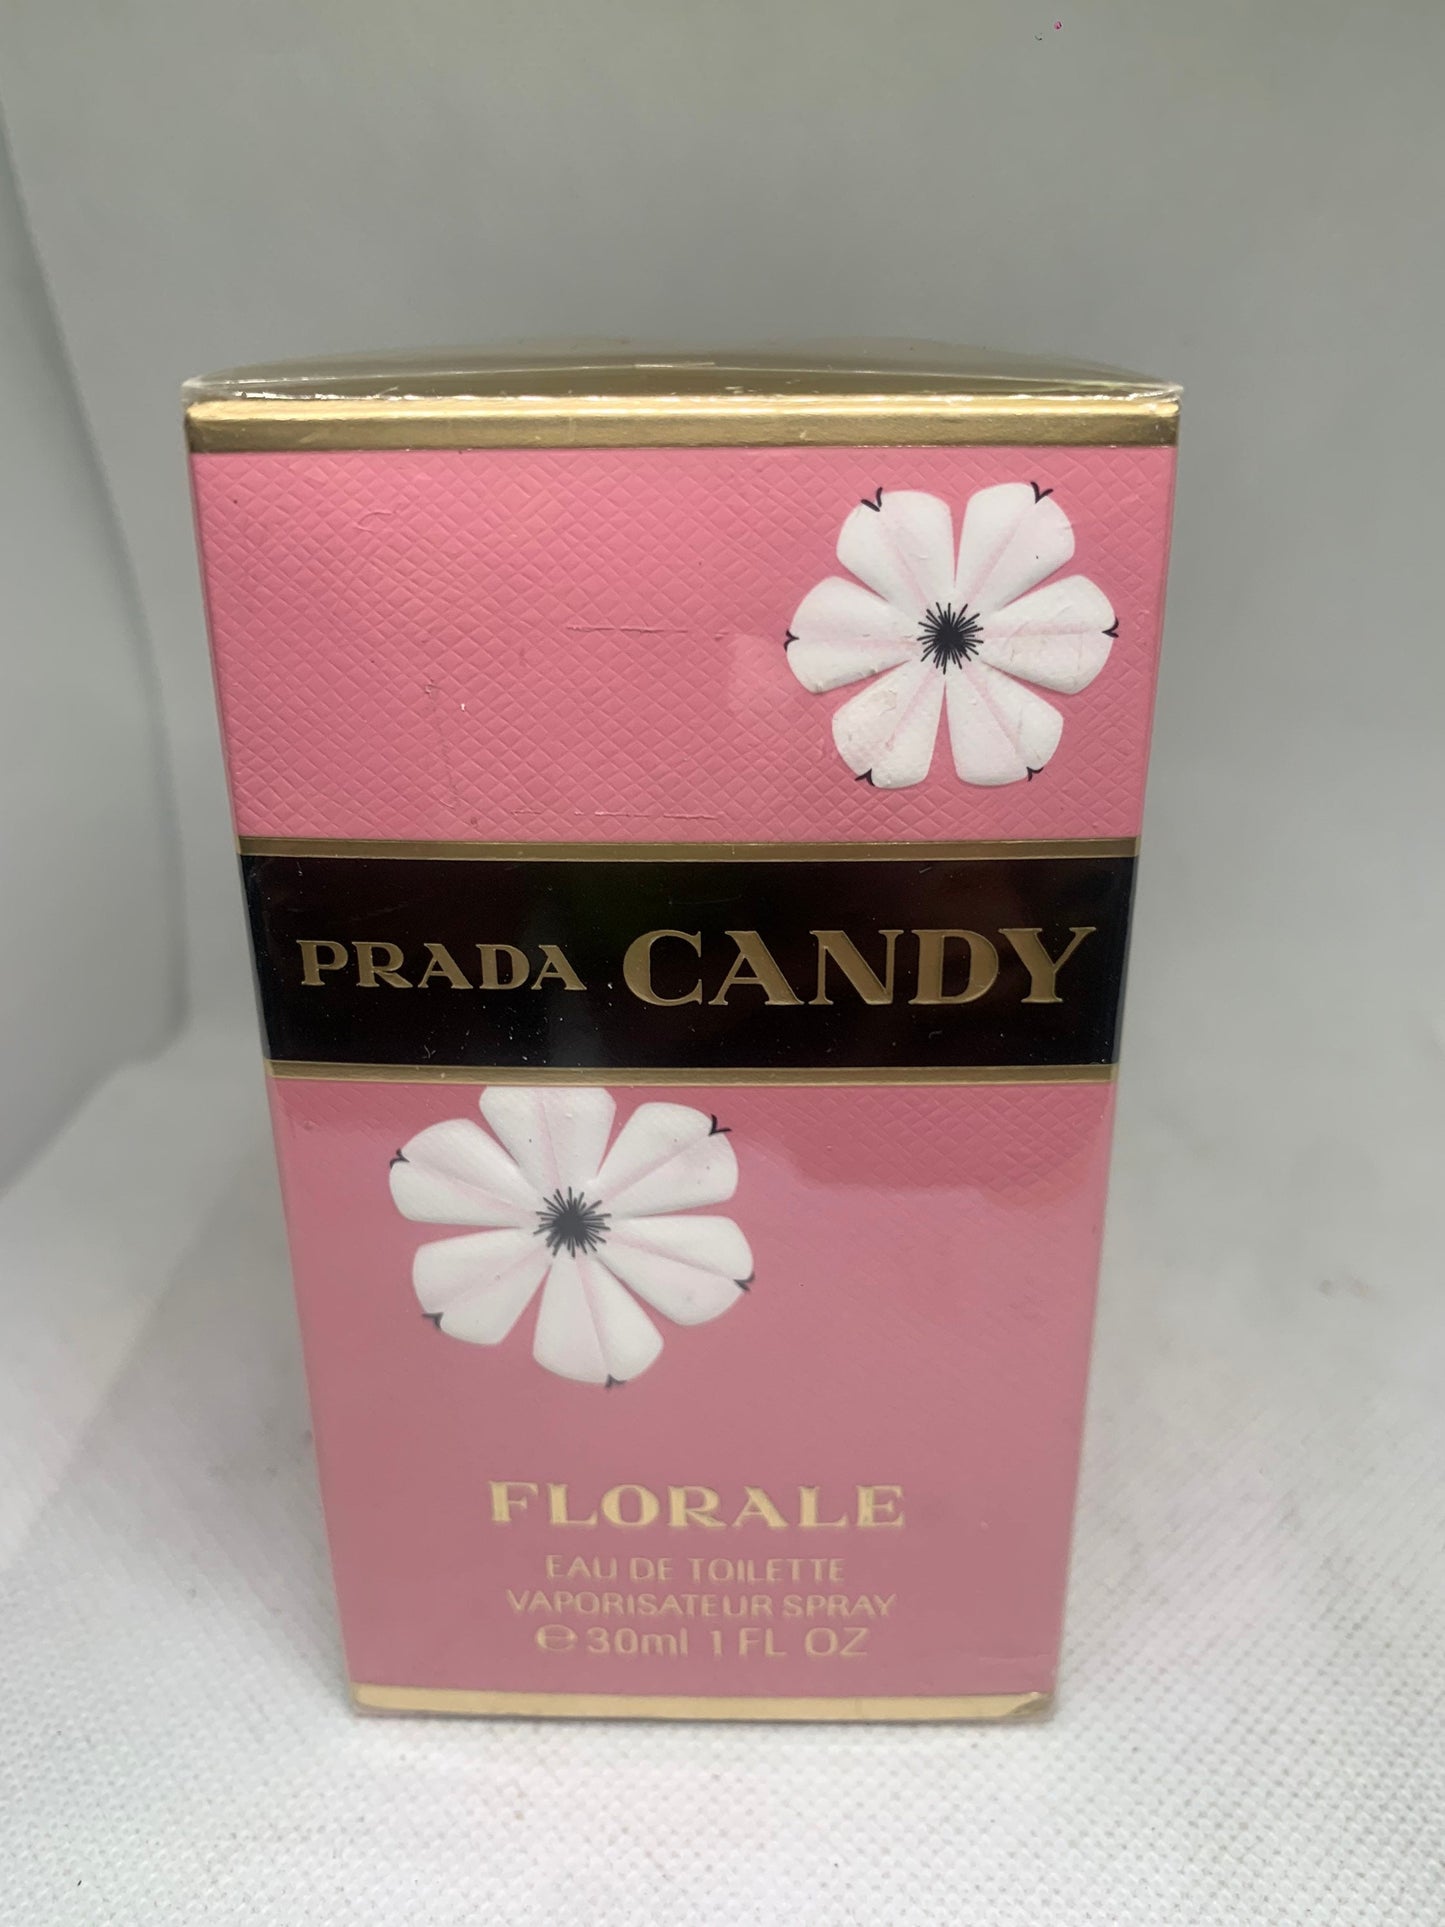 Prada Candy Florale Eau de Toilette 30ml 1 Fl oz (BB 21 Apr 22)